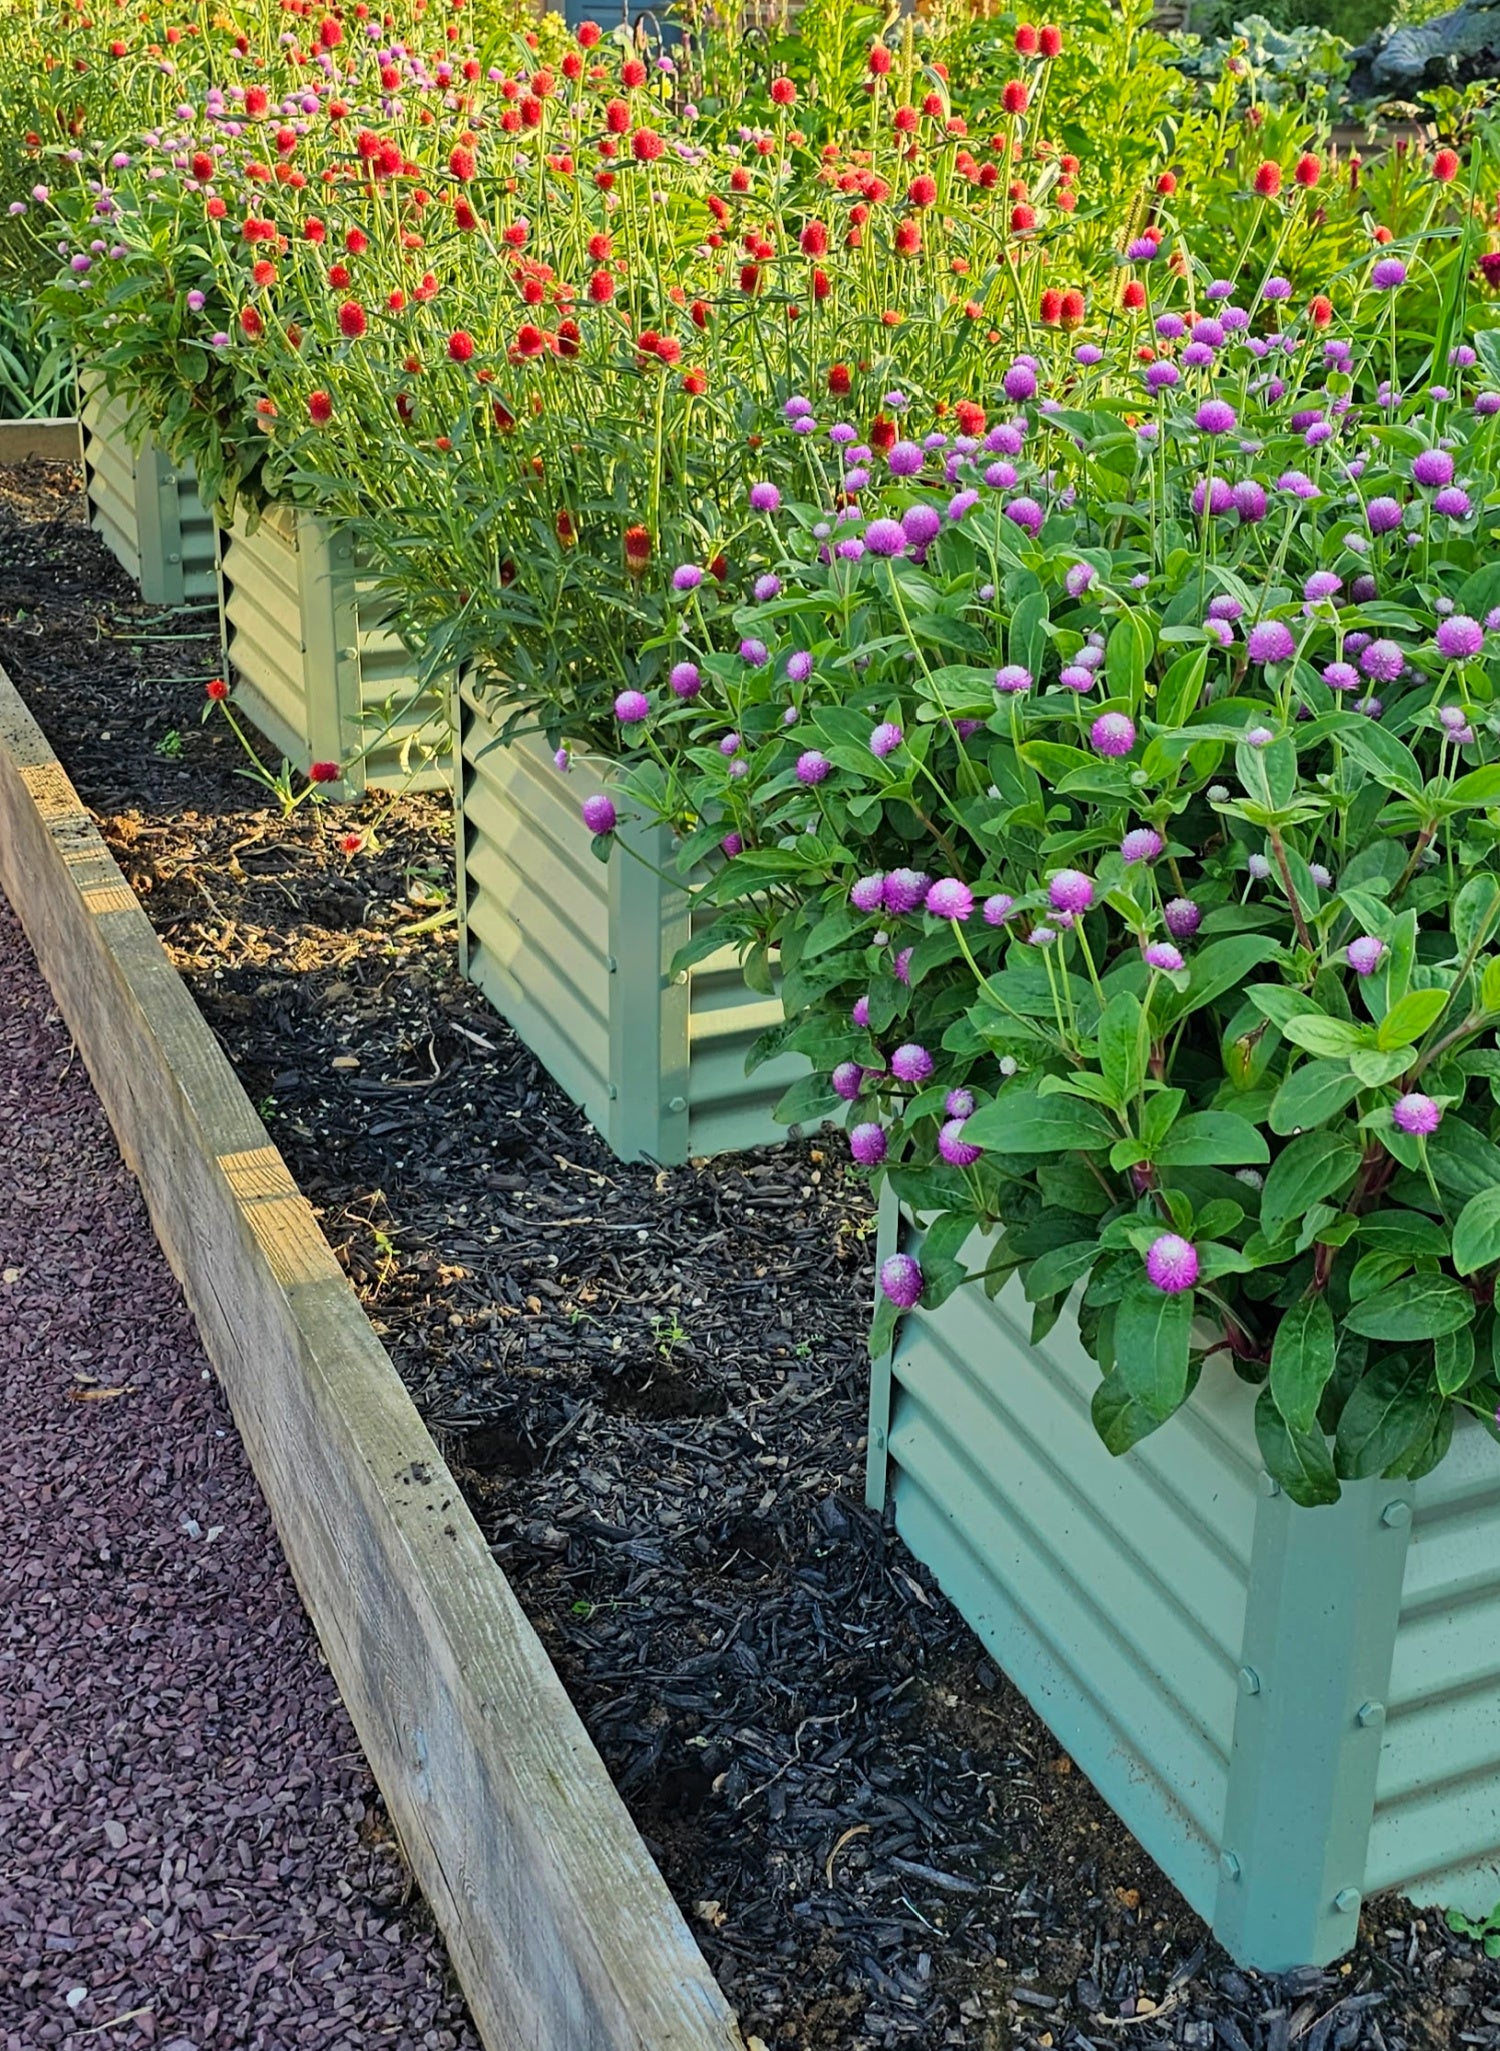 salvia garden beds with glob amaranths